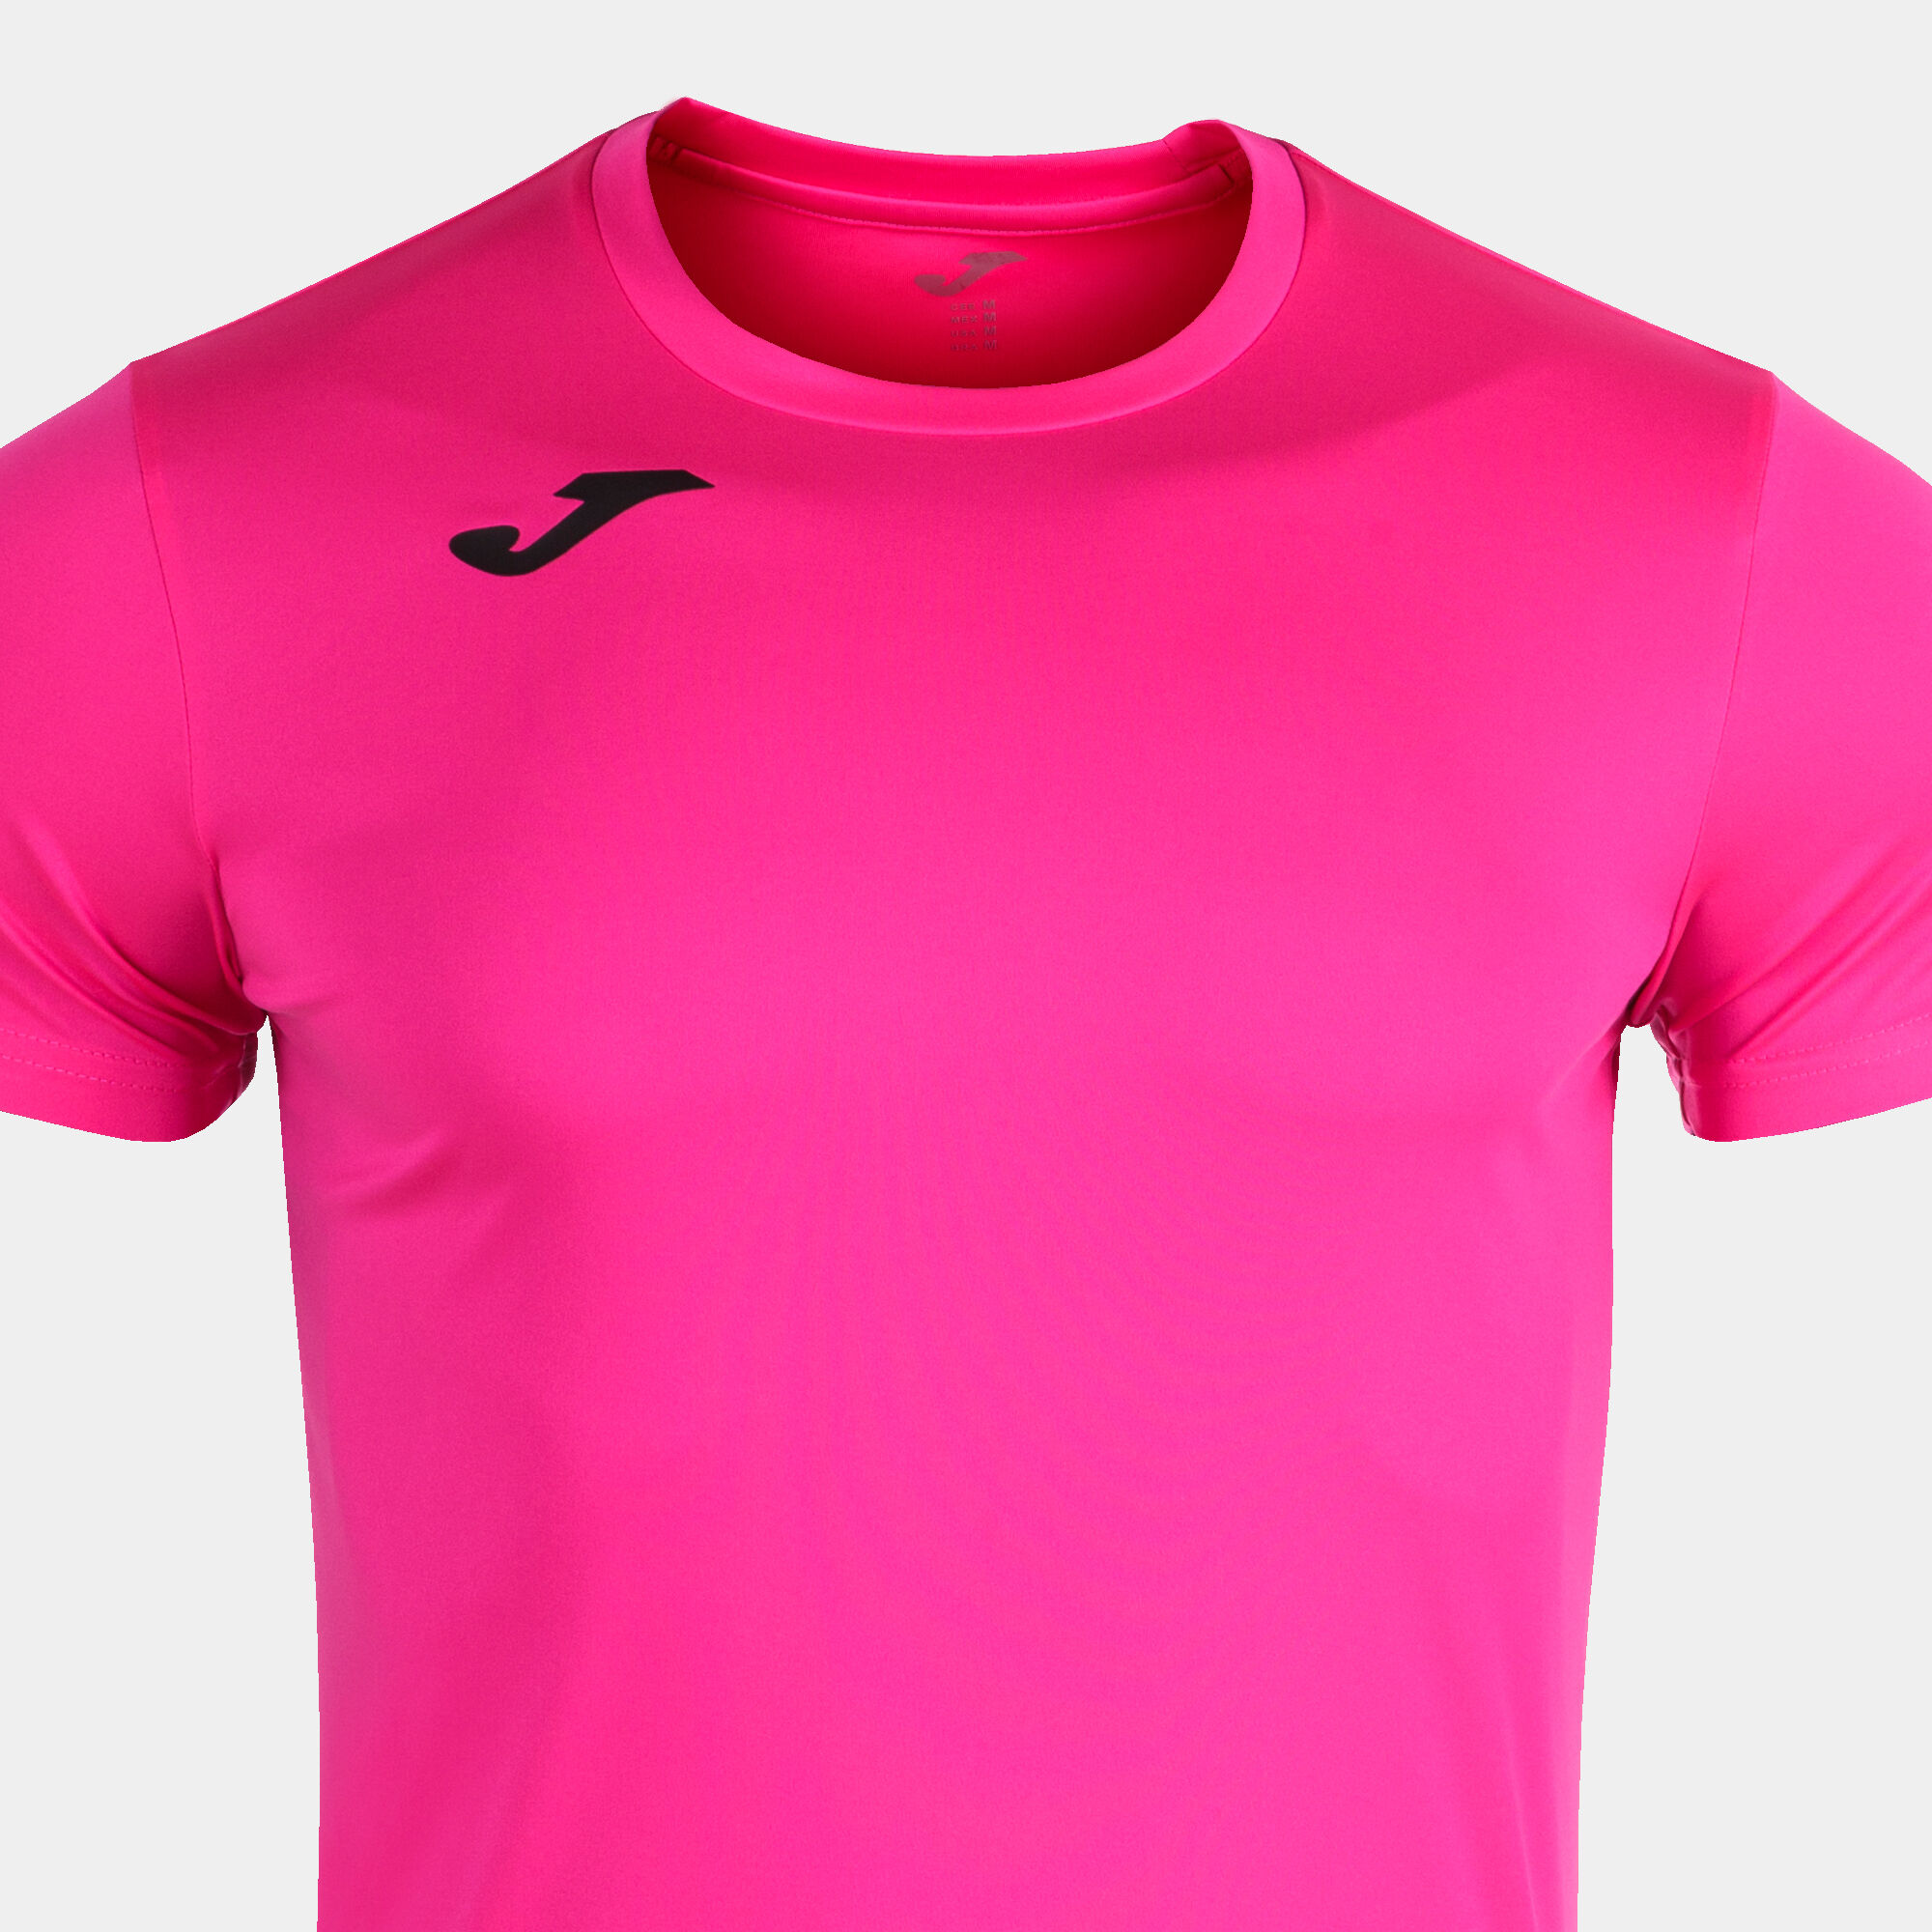  Joma - Camisetas, Camisas Y Polos Deportivos Para